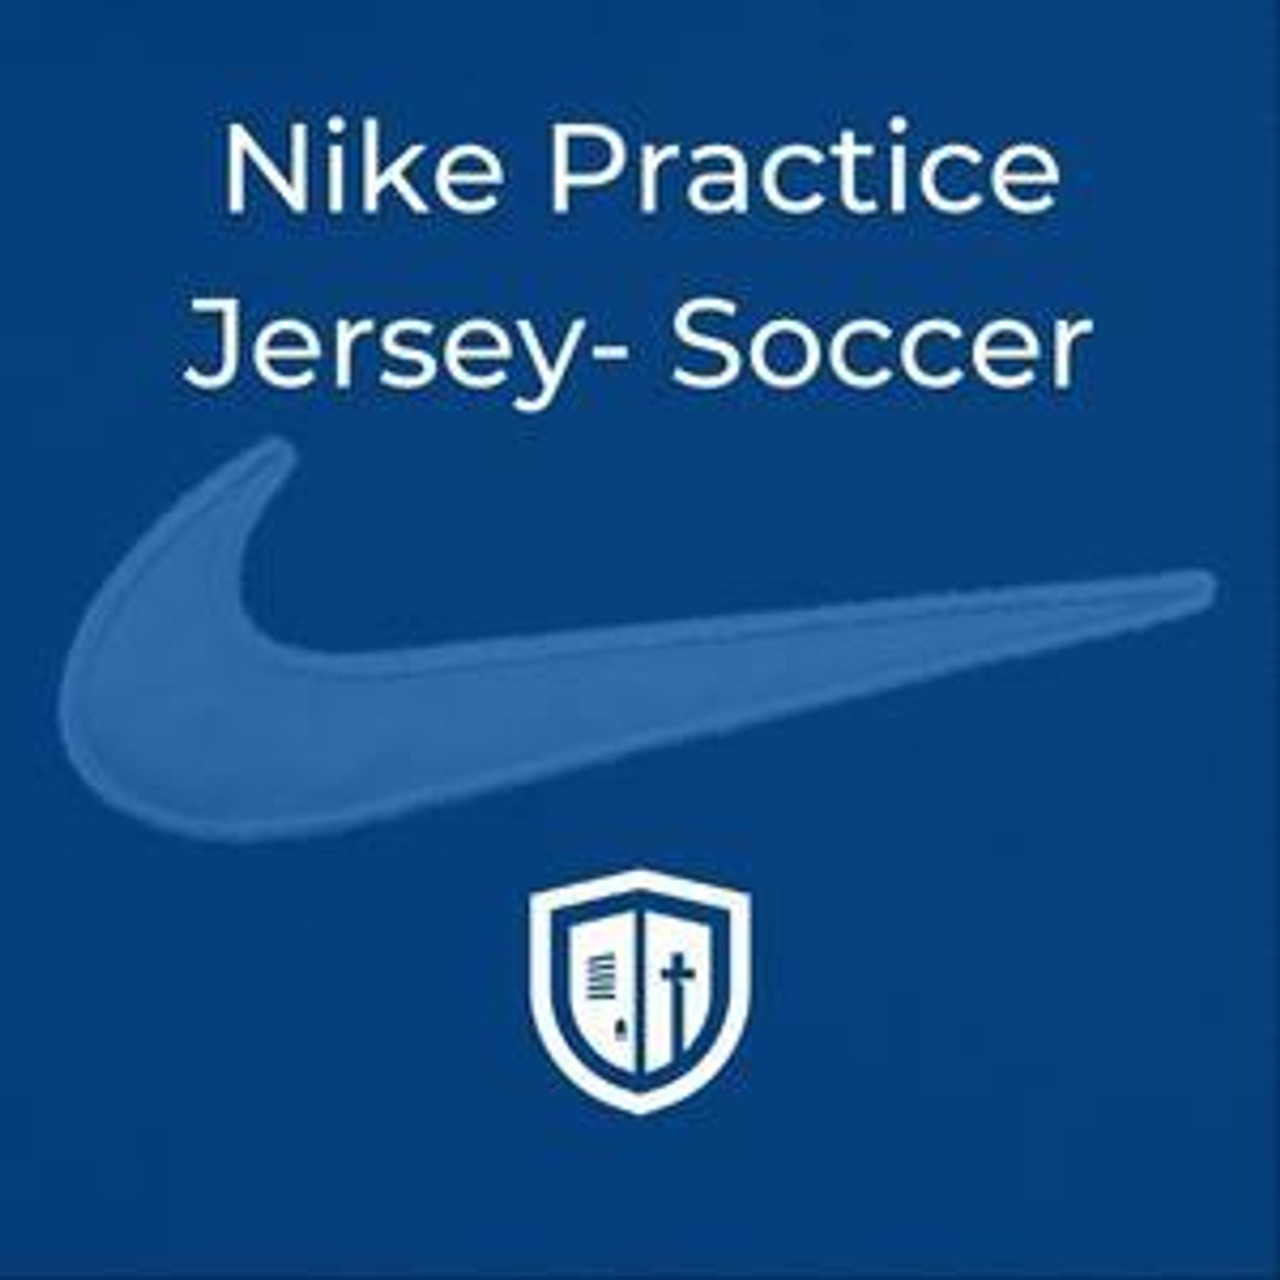 Practice Jersey - Soccer